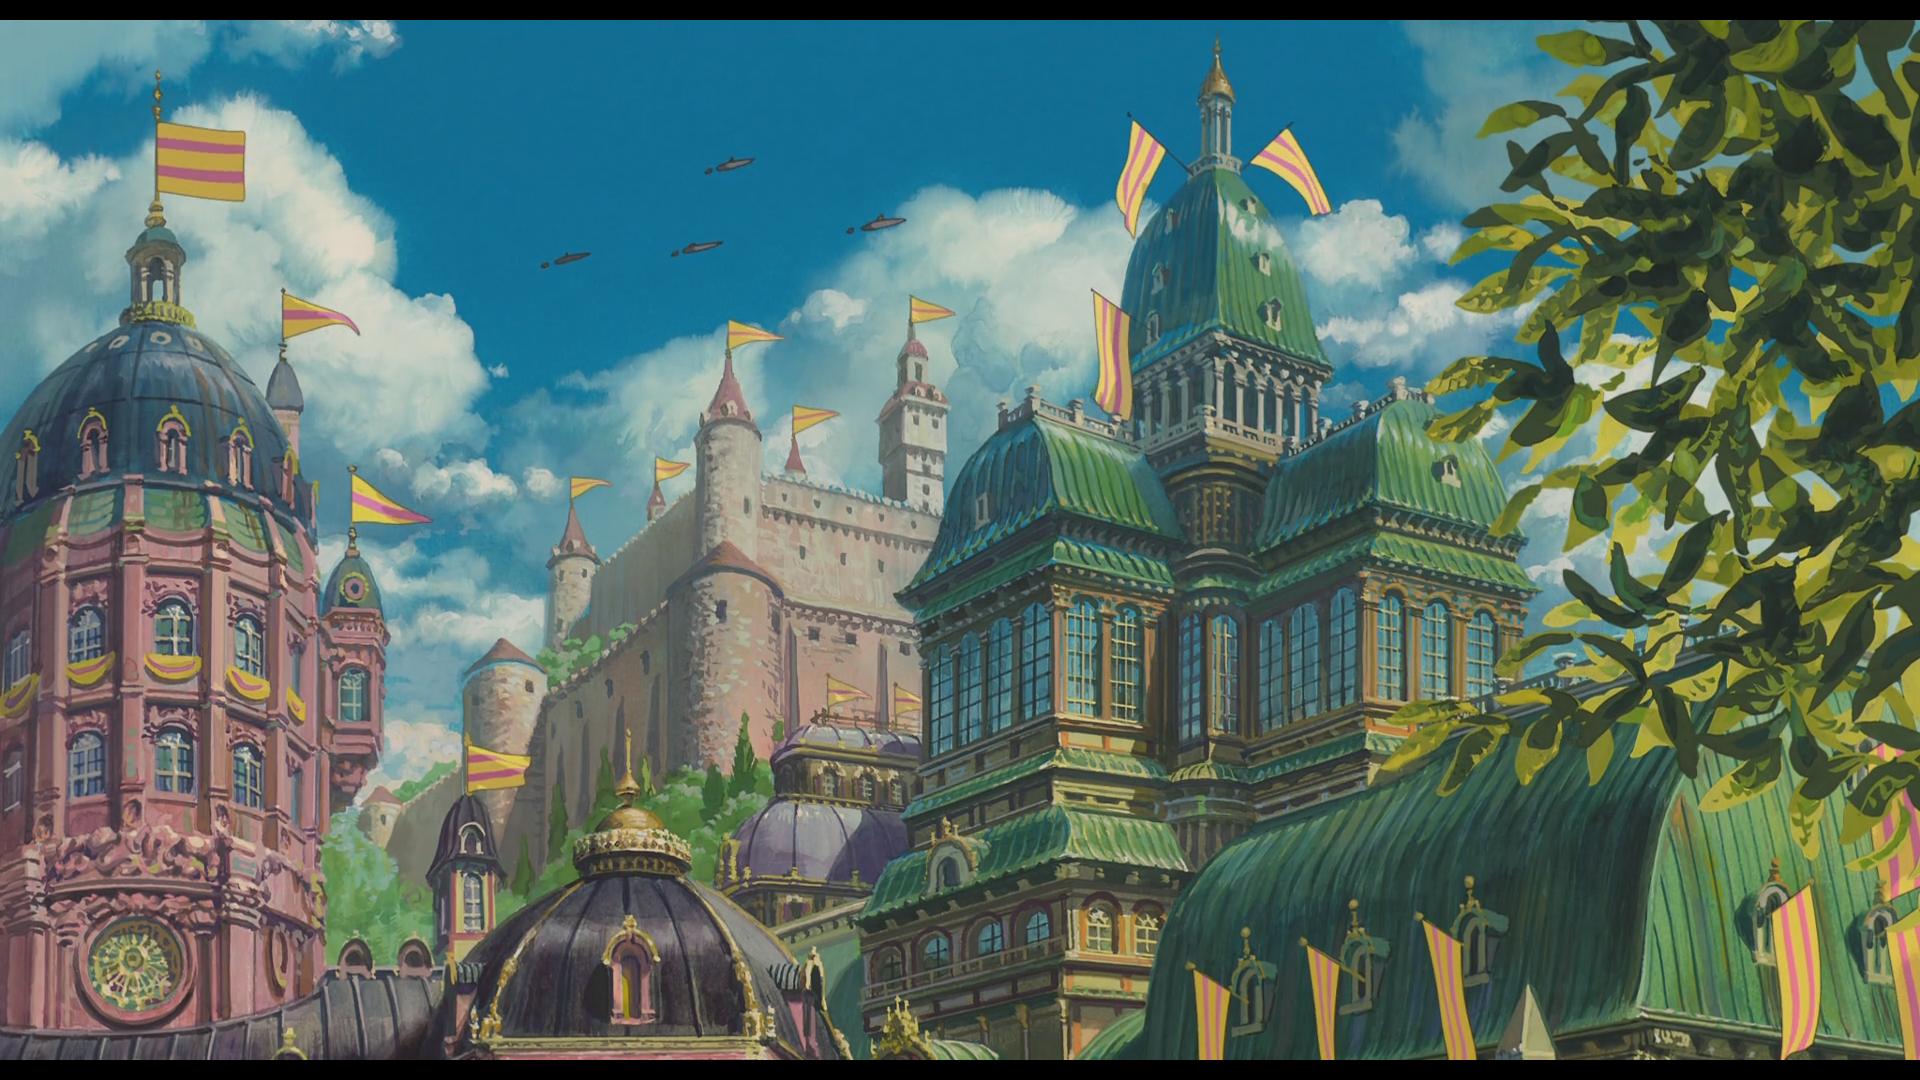 Tohad from Howl's Moving Castle (Hauru no Ugoku Shiro, Studio Ghibli )